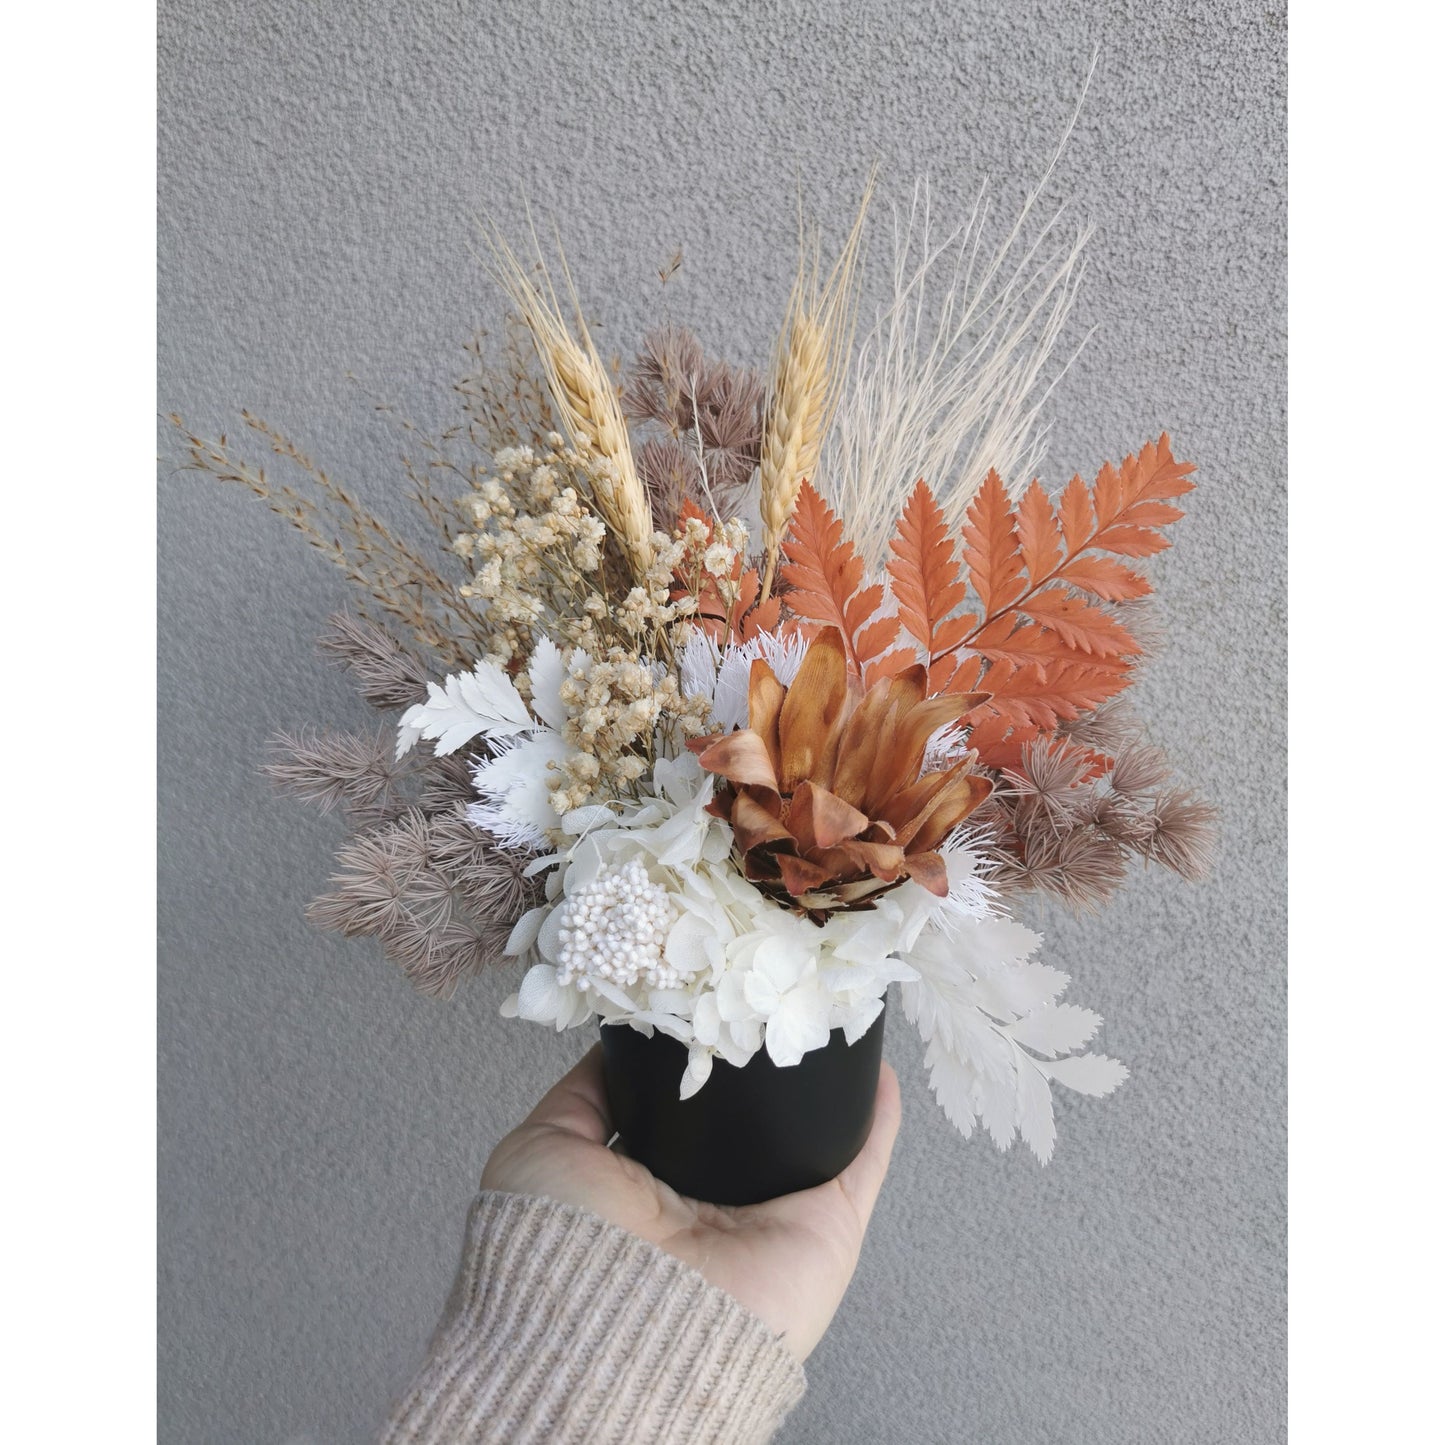 Autumn Delight - dried flower arrangement